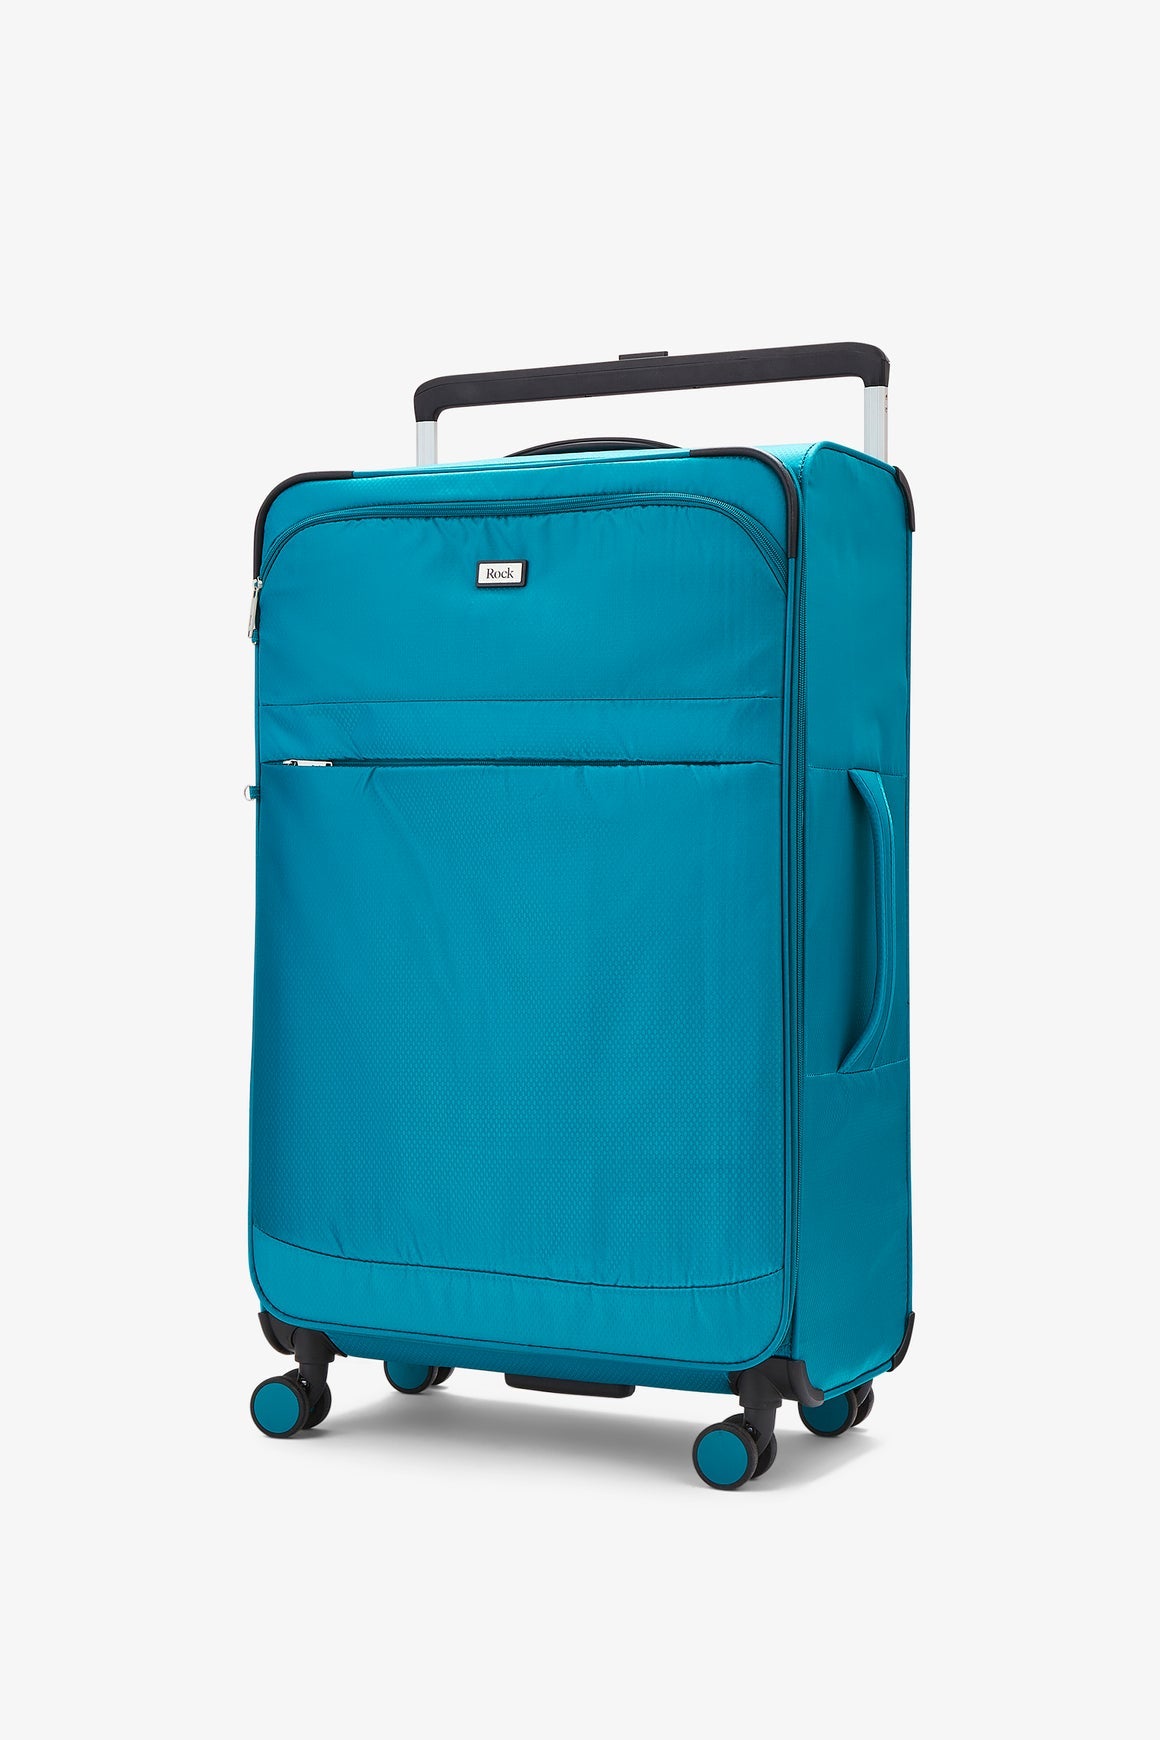 Rocklite Large Suitcase